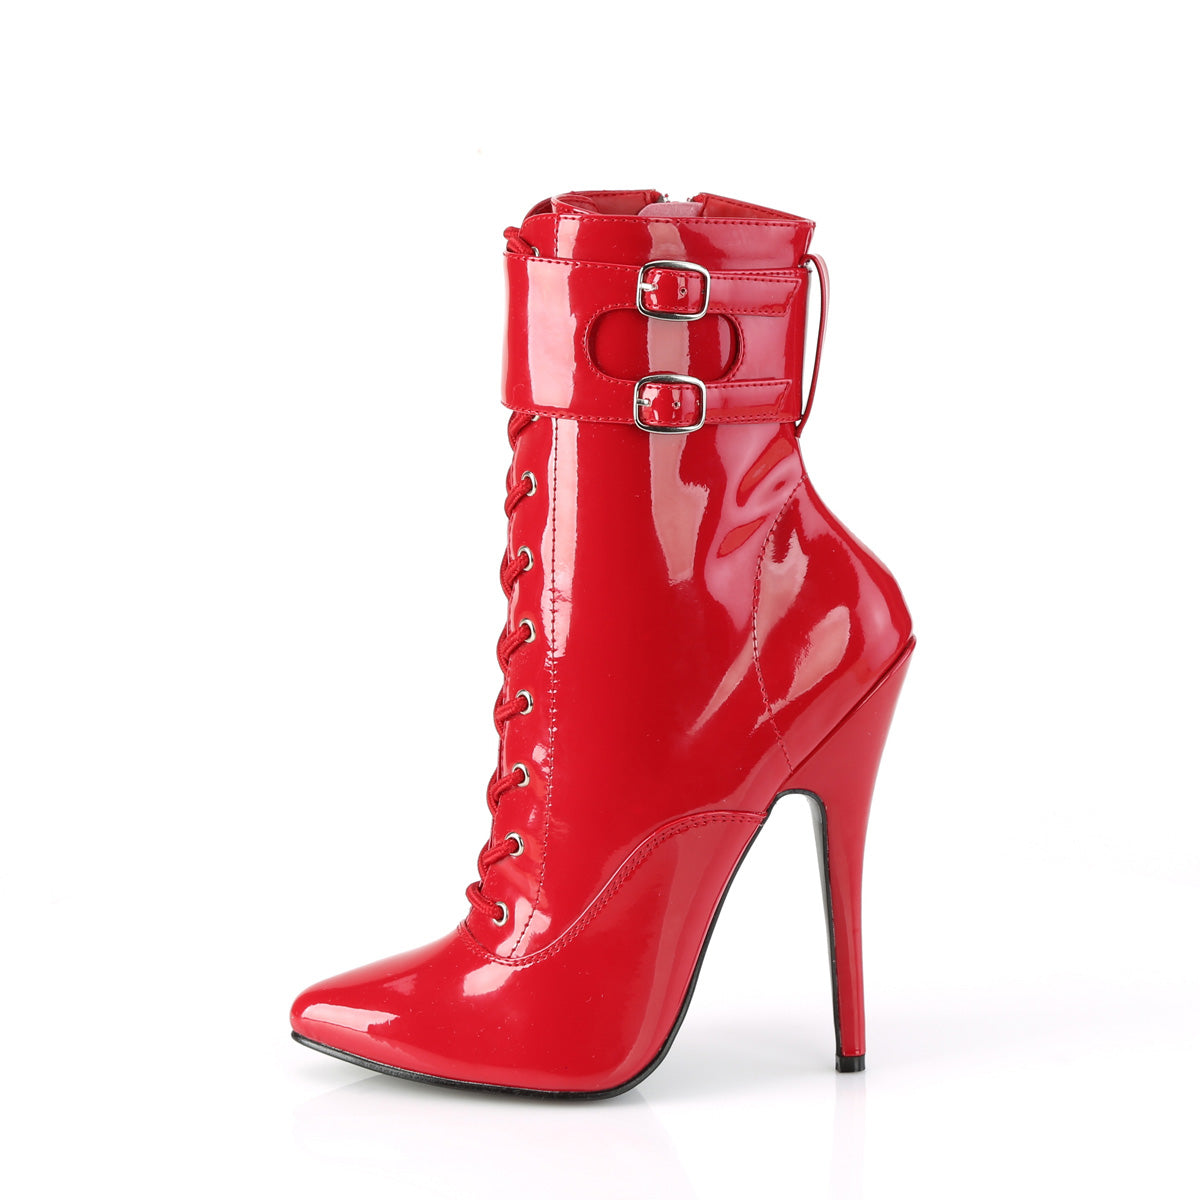 6 Inch Heel DOMINA-1023 Red Patent